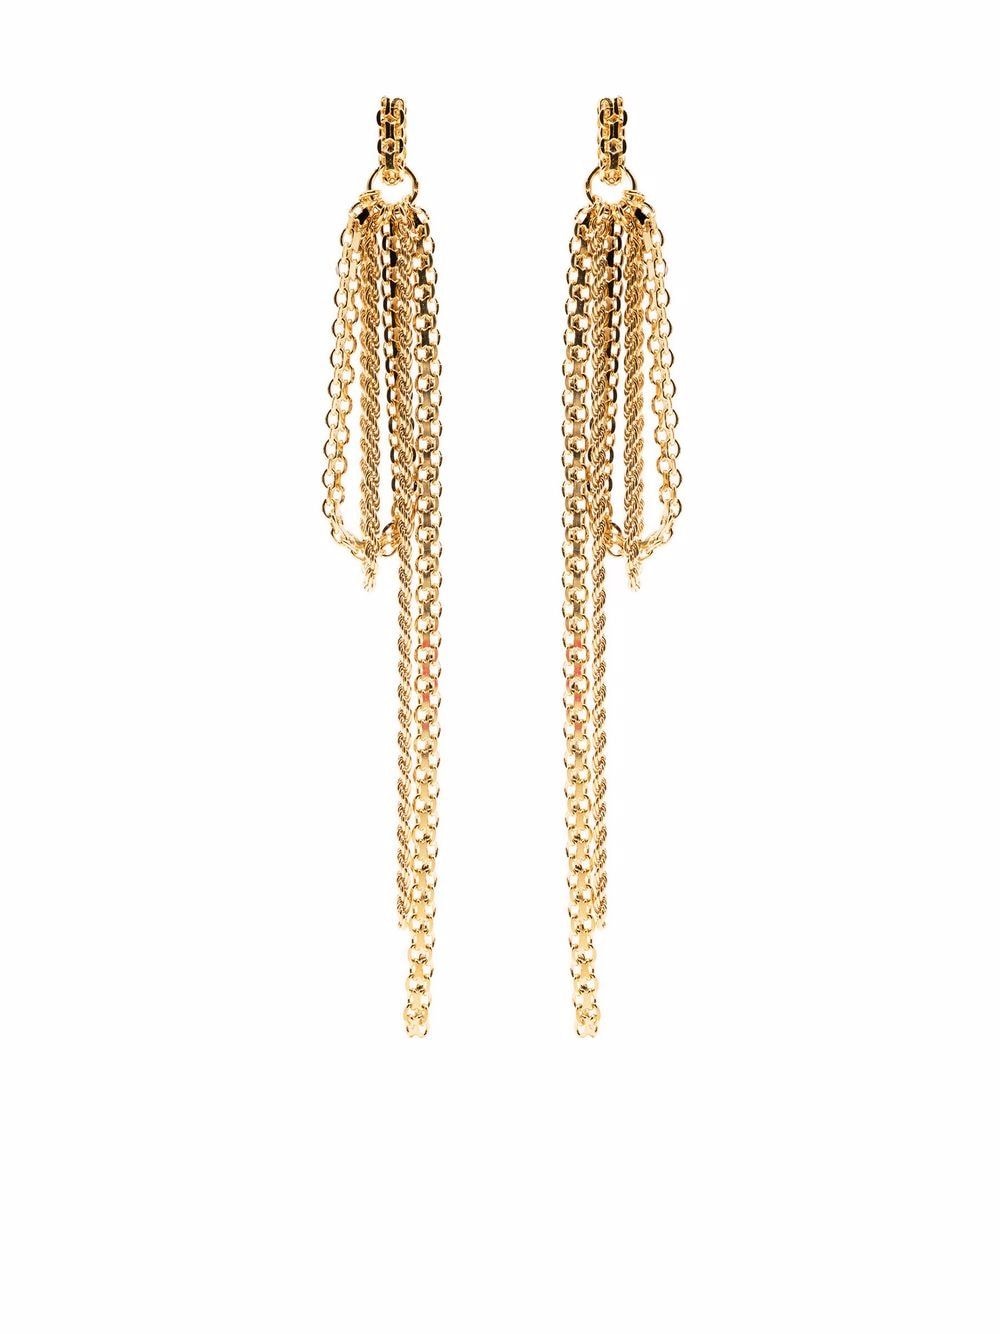 фото Wouters & hendrix serpentine folded chains earrings